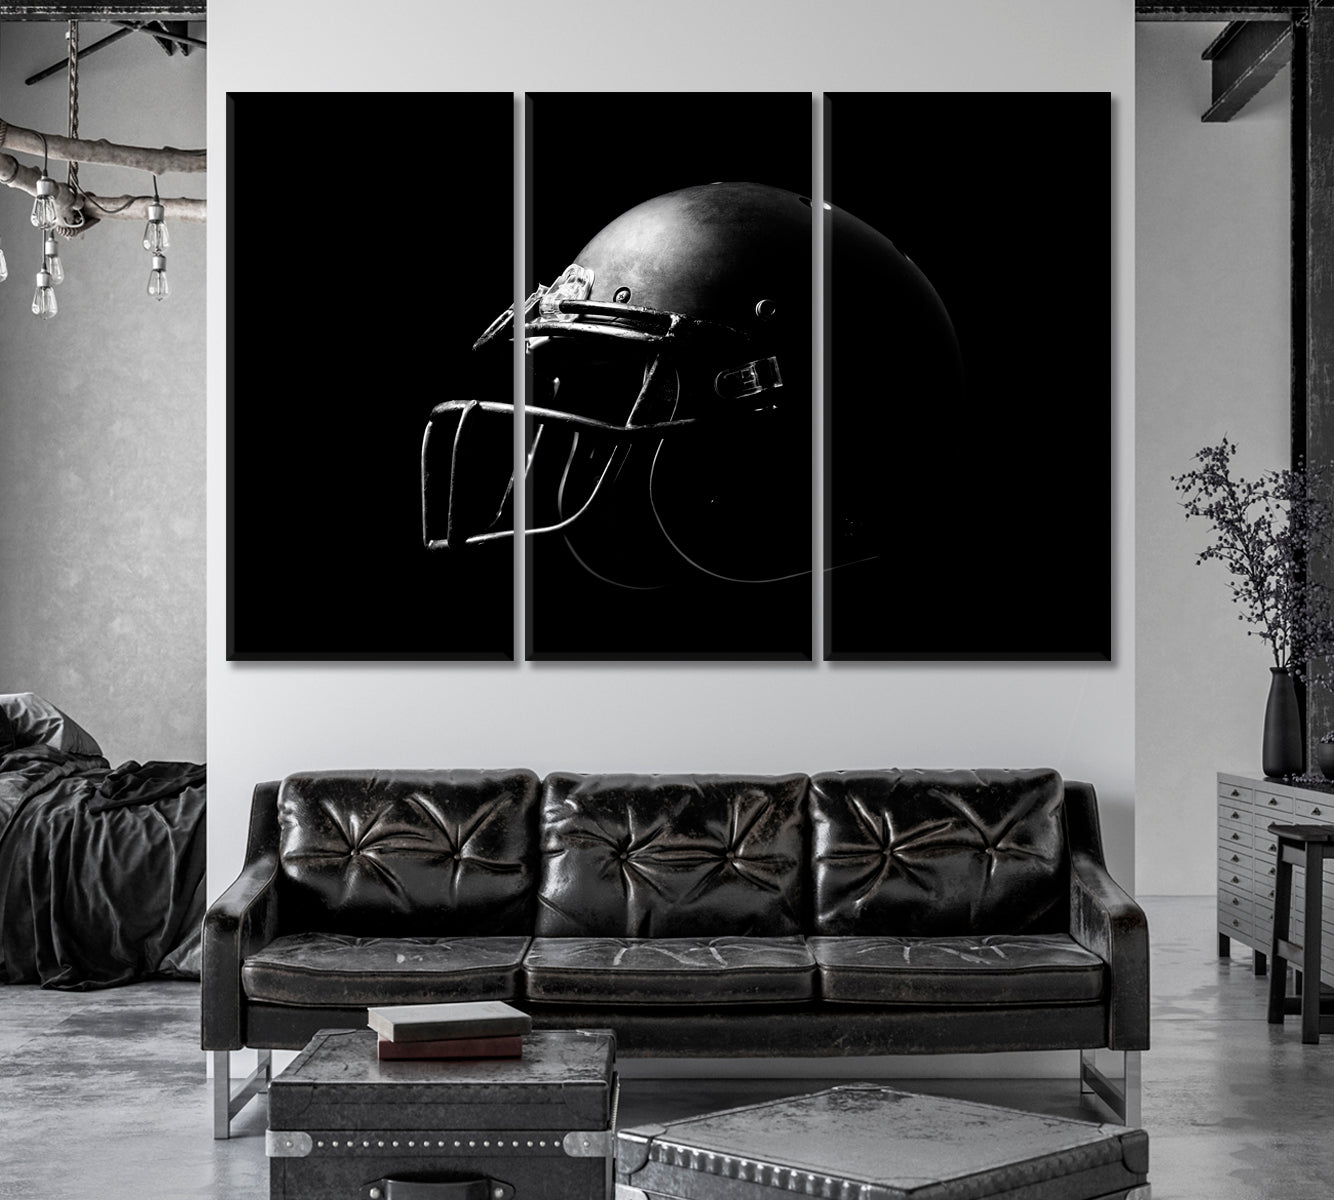 American Football Helmet Canvas Print-Canvas Print-CetArt-1 Panel-24x16 inches-CetArt